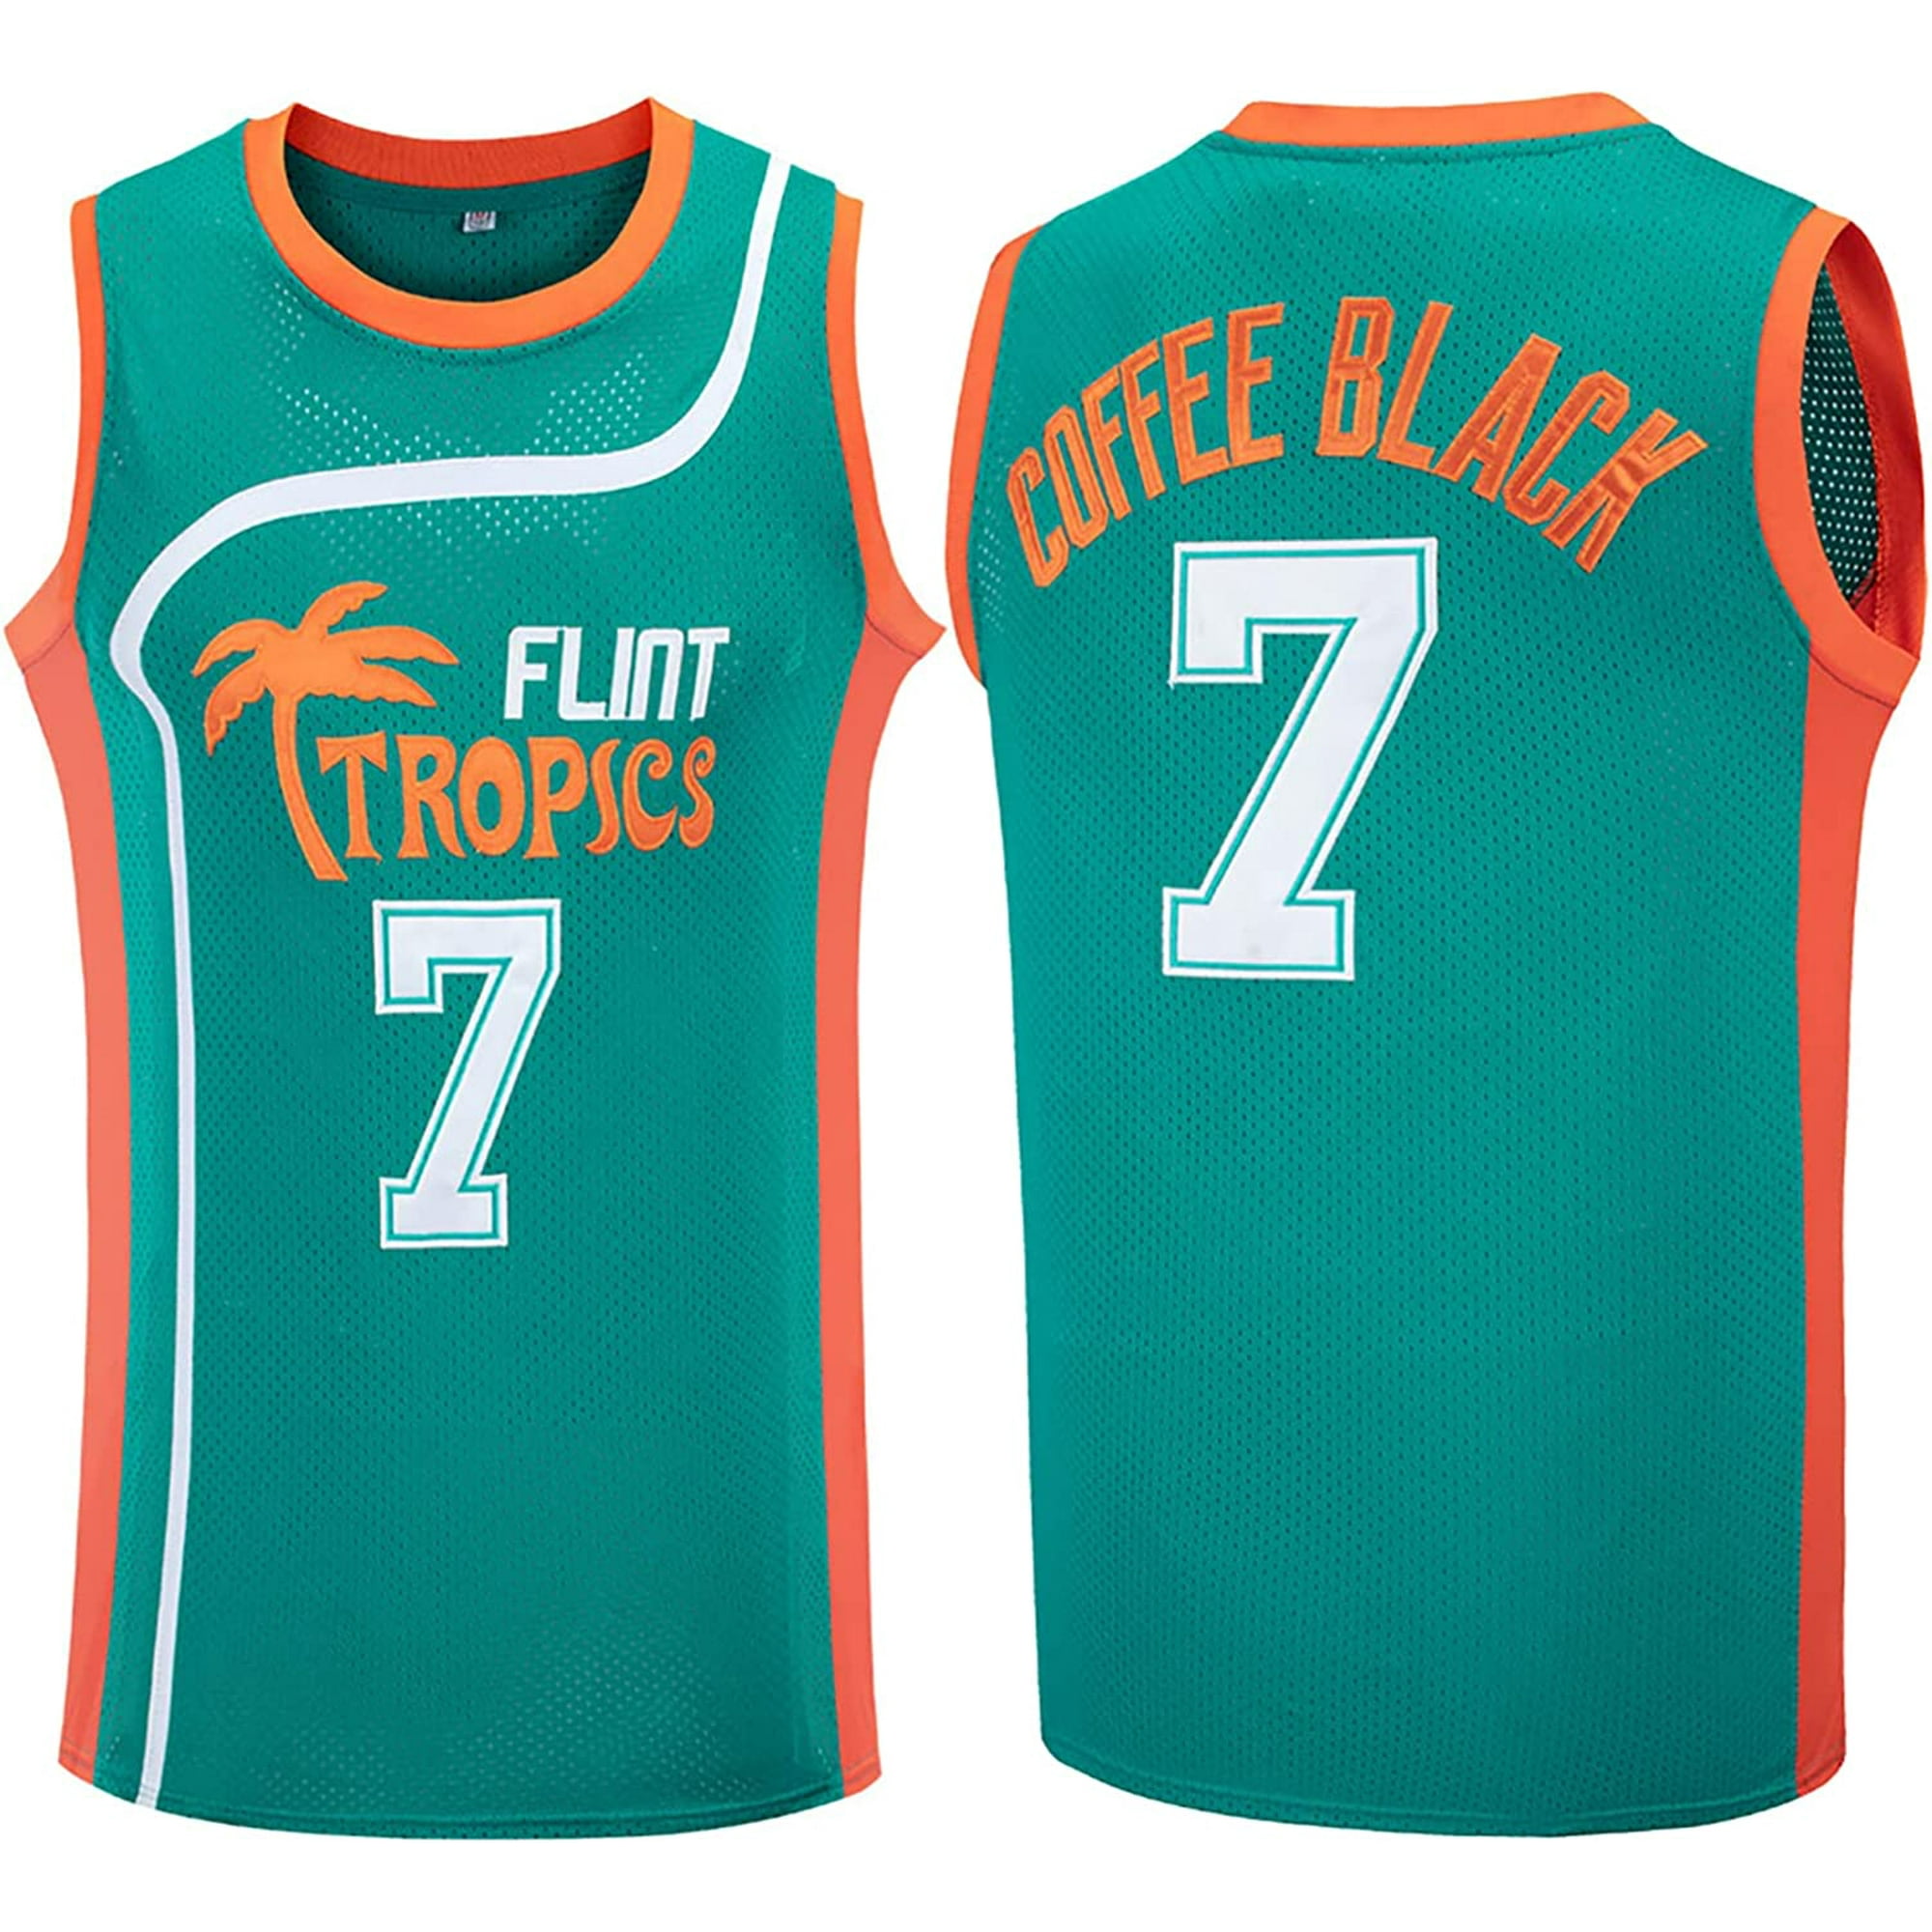 Coffee Black Jersey 7 Flint Tropics Basketball Jersey 33 Jackie Moon Jersey  Sports Shirt Mens Movie Clothes S-XXXL 